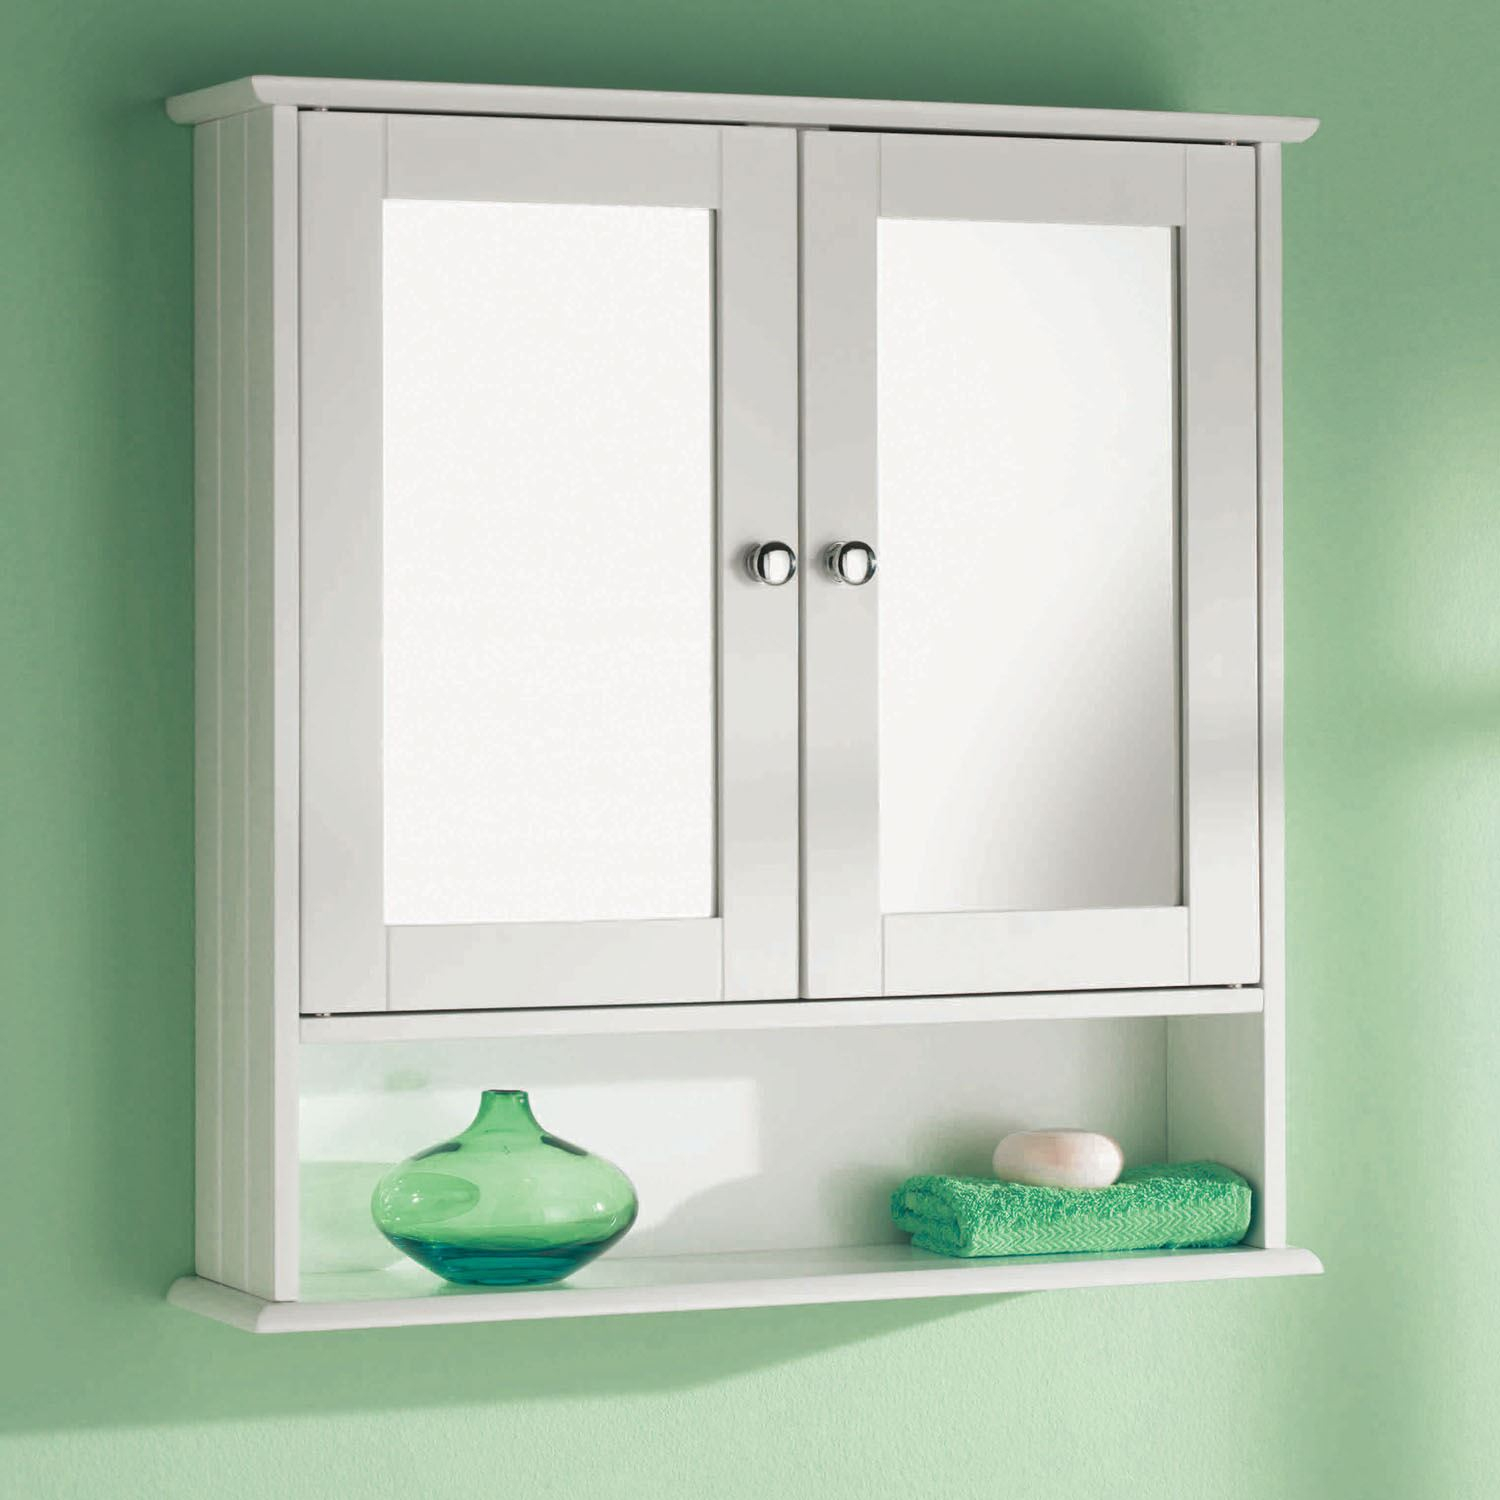 Double Door Mirror Shelf Wall Mounted Wood Storage Bathroom pertaining to proportions 1500 X 1500